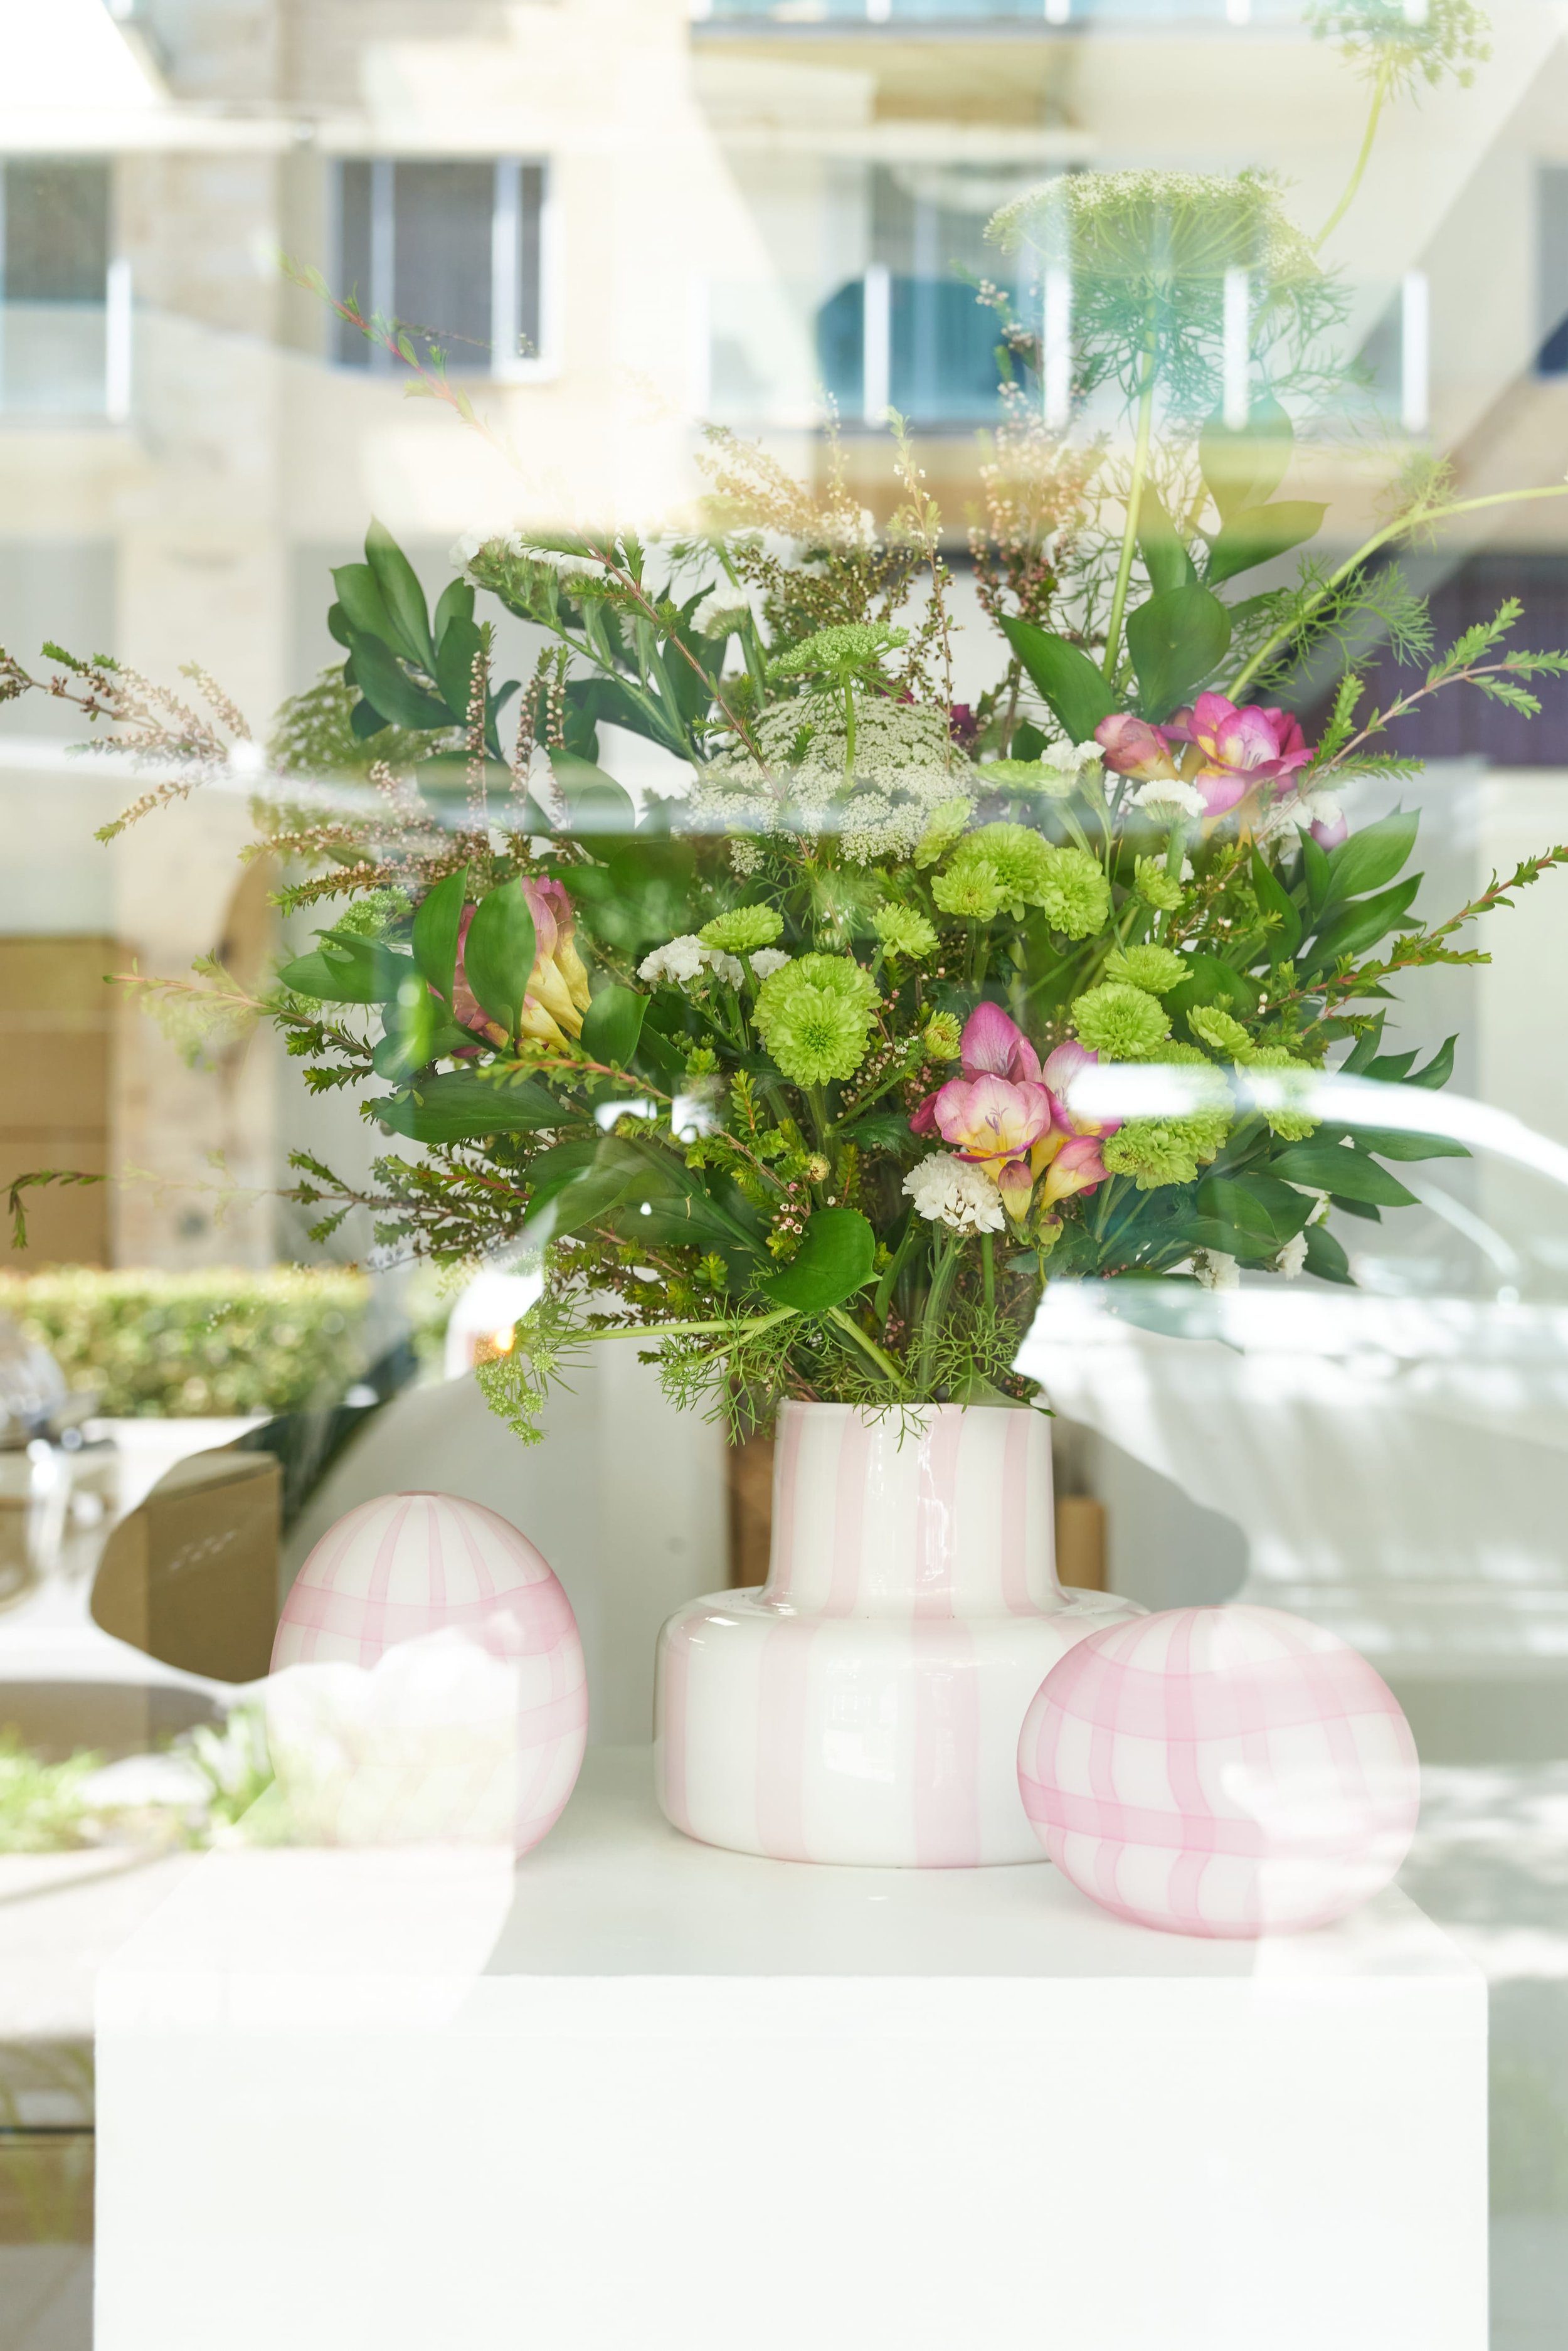 20221016-DSC06201_spring 2022 floral arrangements at a flat shop frome street [bailey donovan with floral arrangement by mel stefanidis].jpg